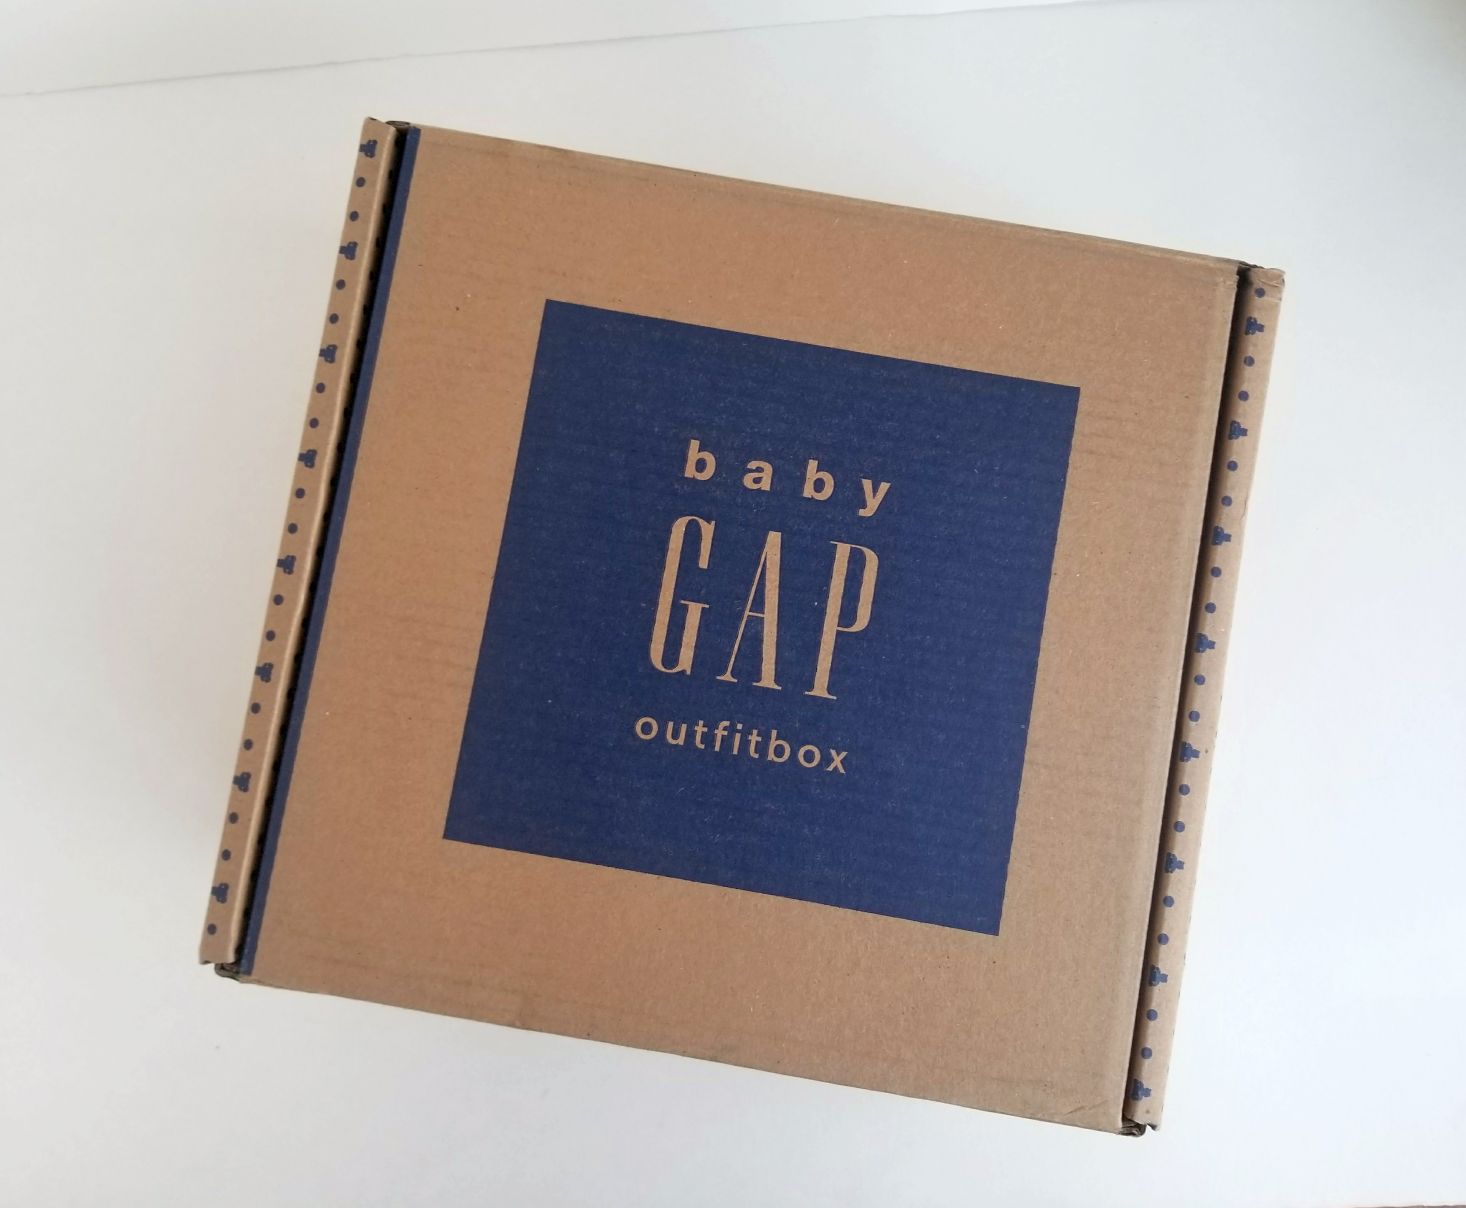 Baby Gap coupons